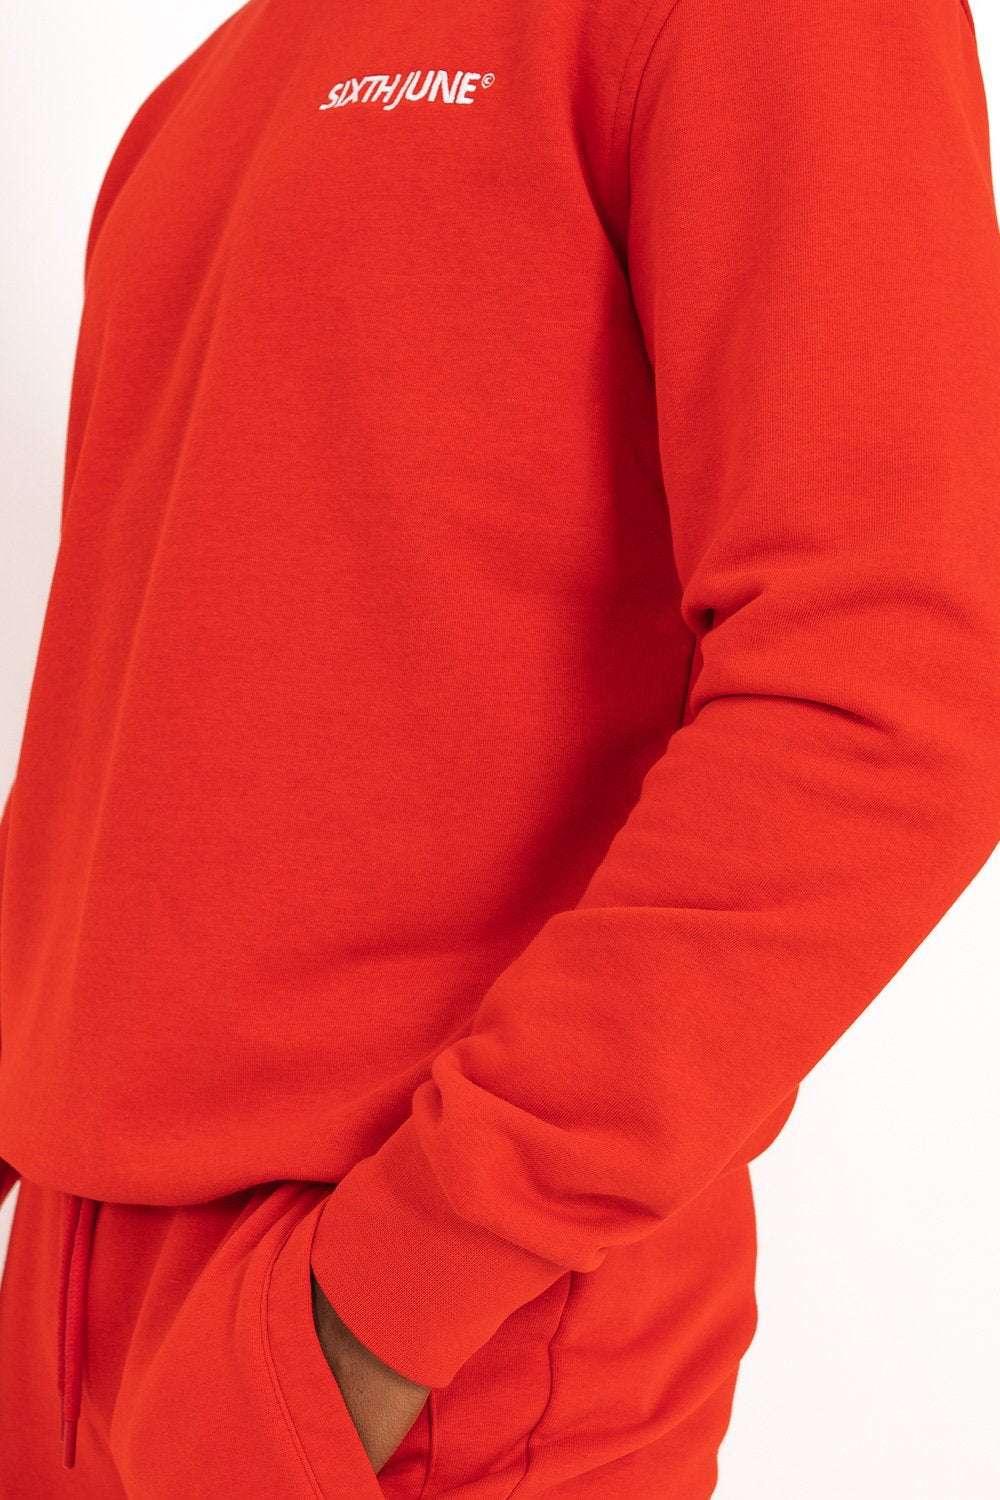 Sixth June - Sweatshirt soft logo brodé Rouge